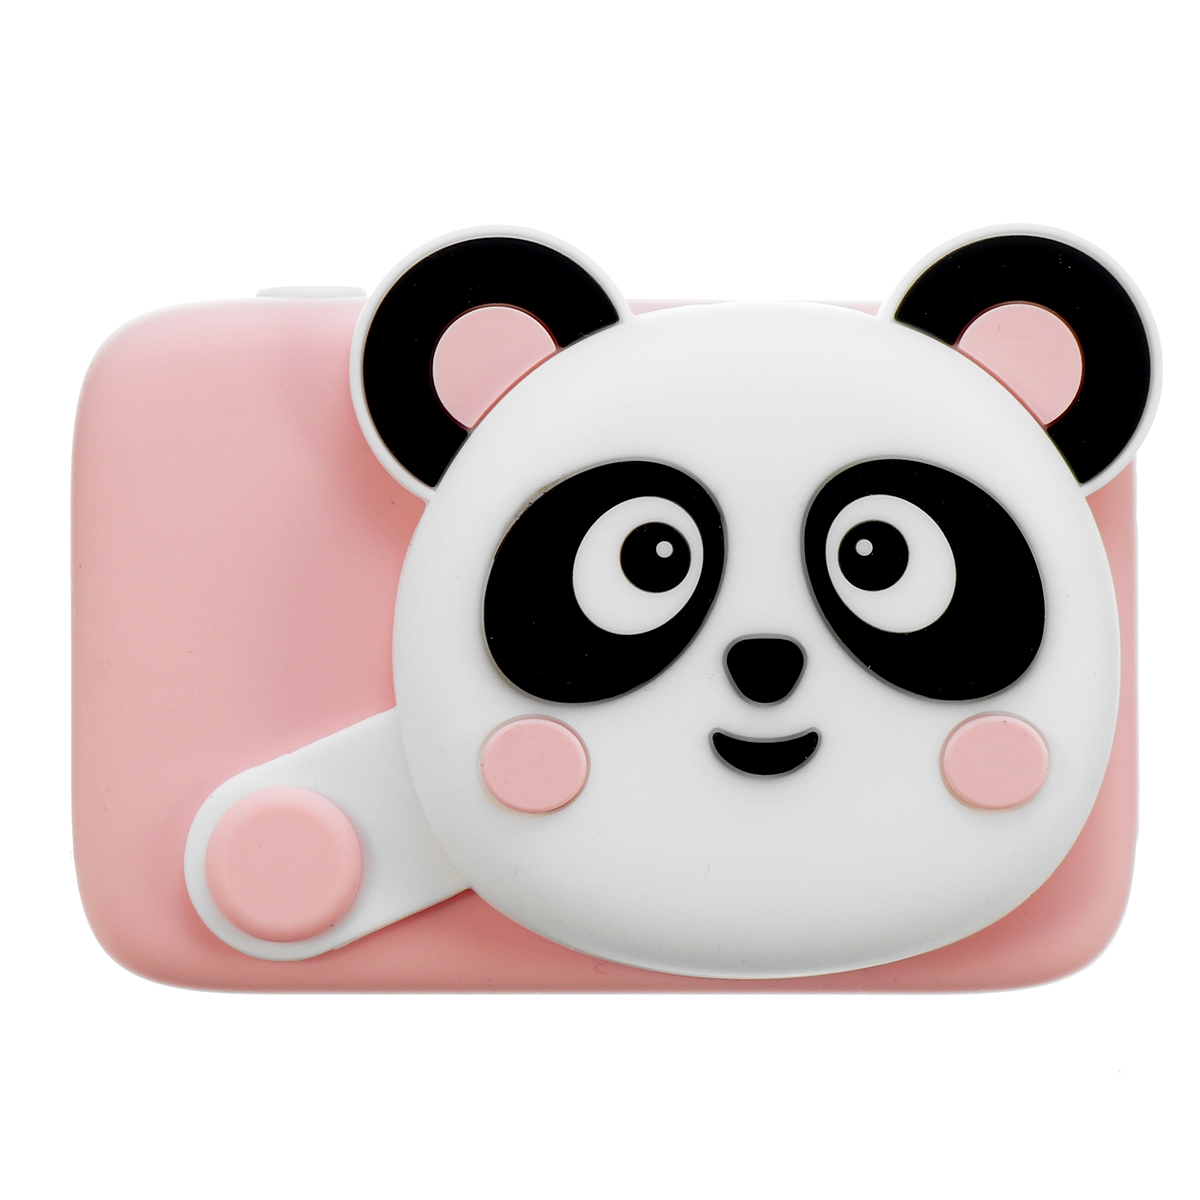 Creative Panda Cartoon Digital Camera Baby Photography Training Educational Toys with 16/32G TF Card for Kids Gift